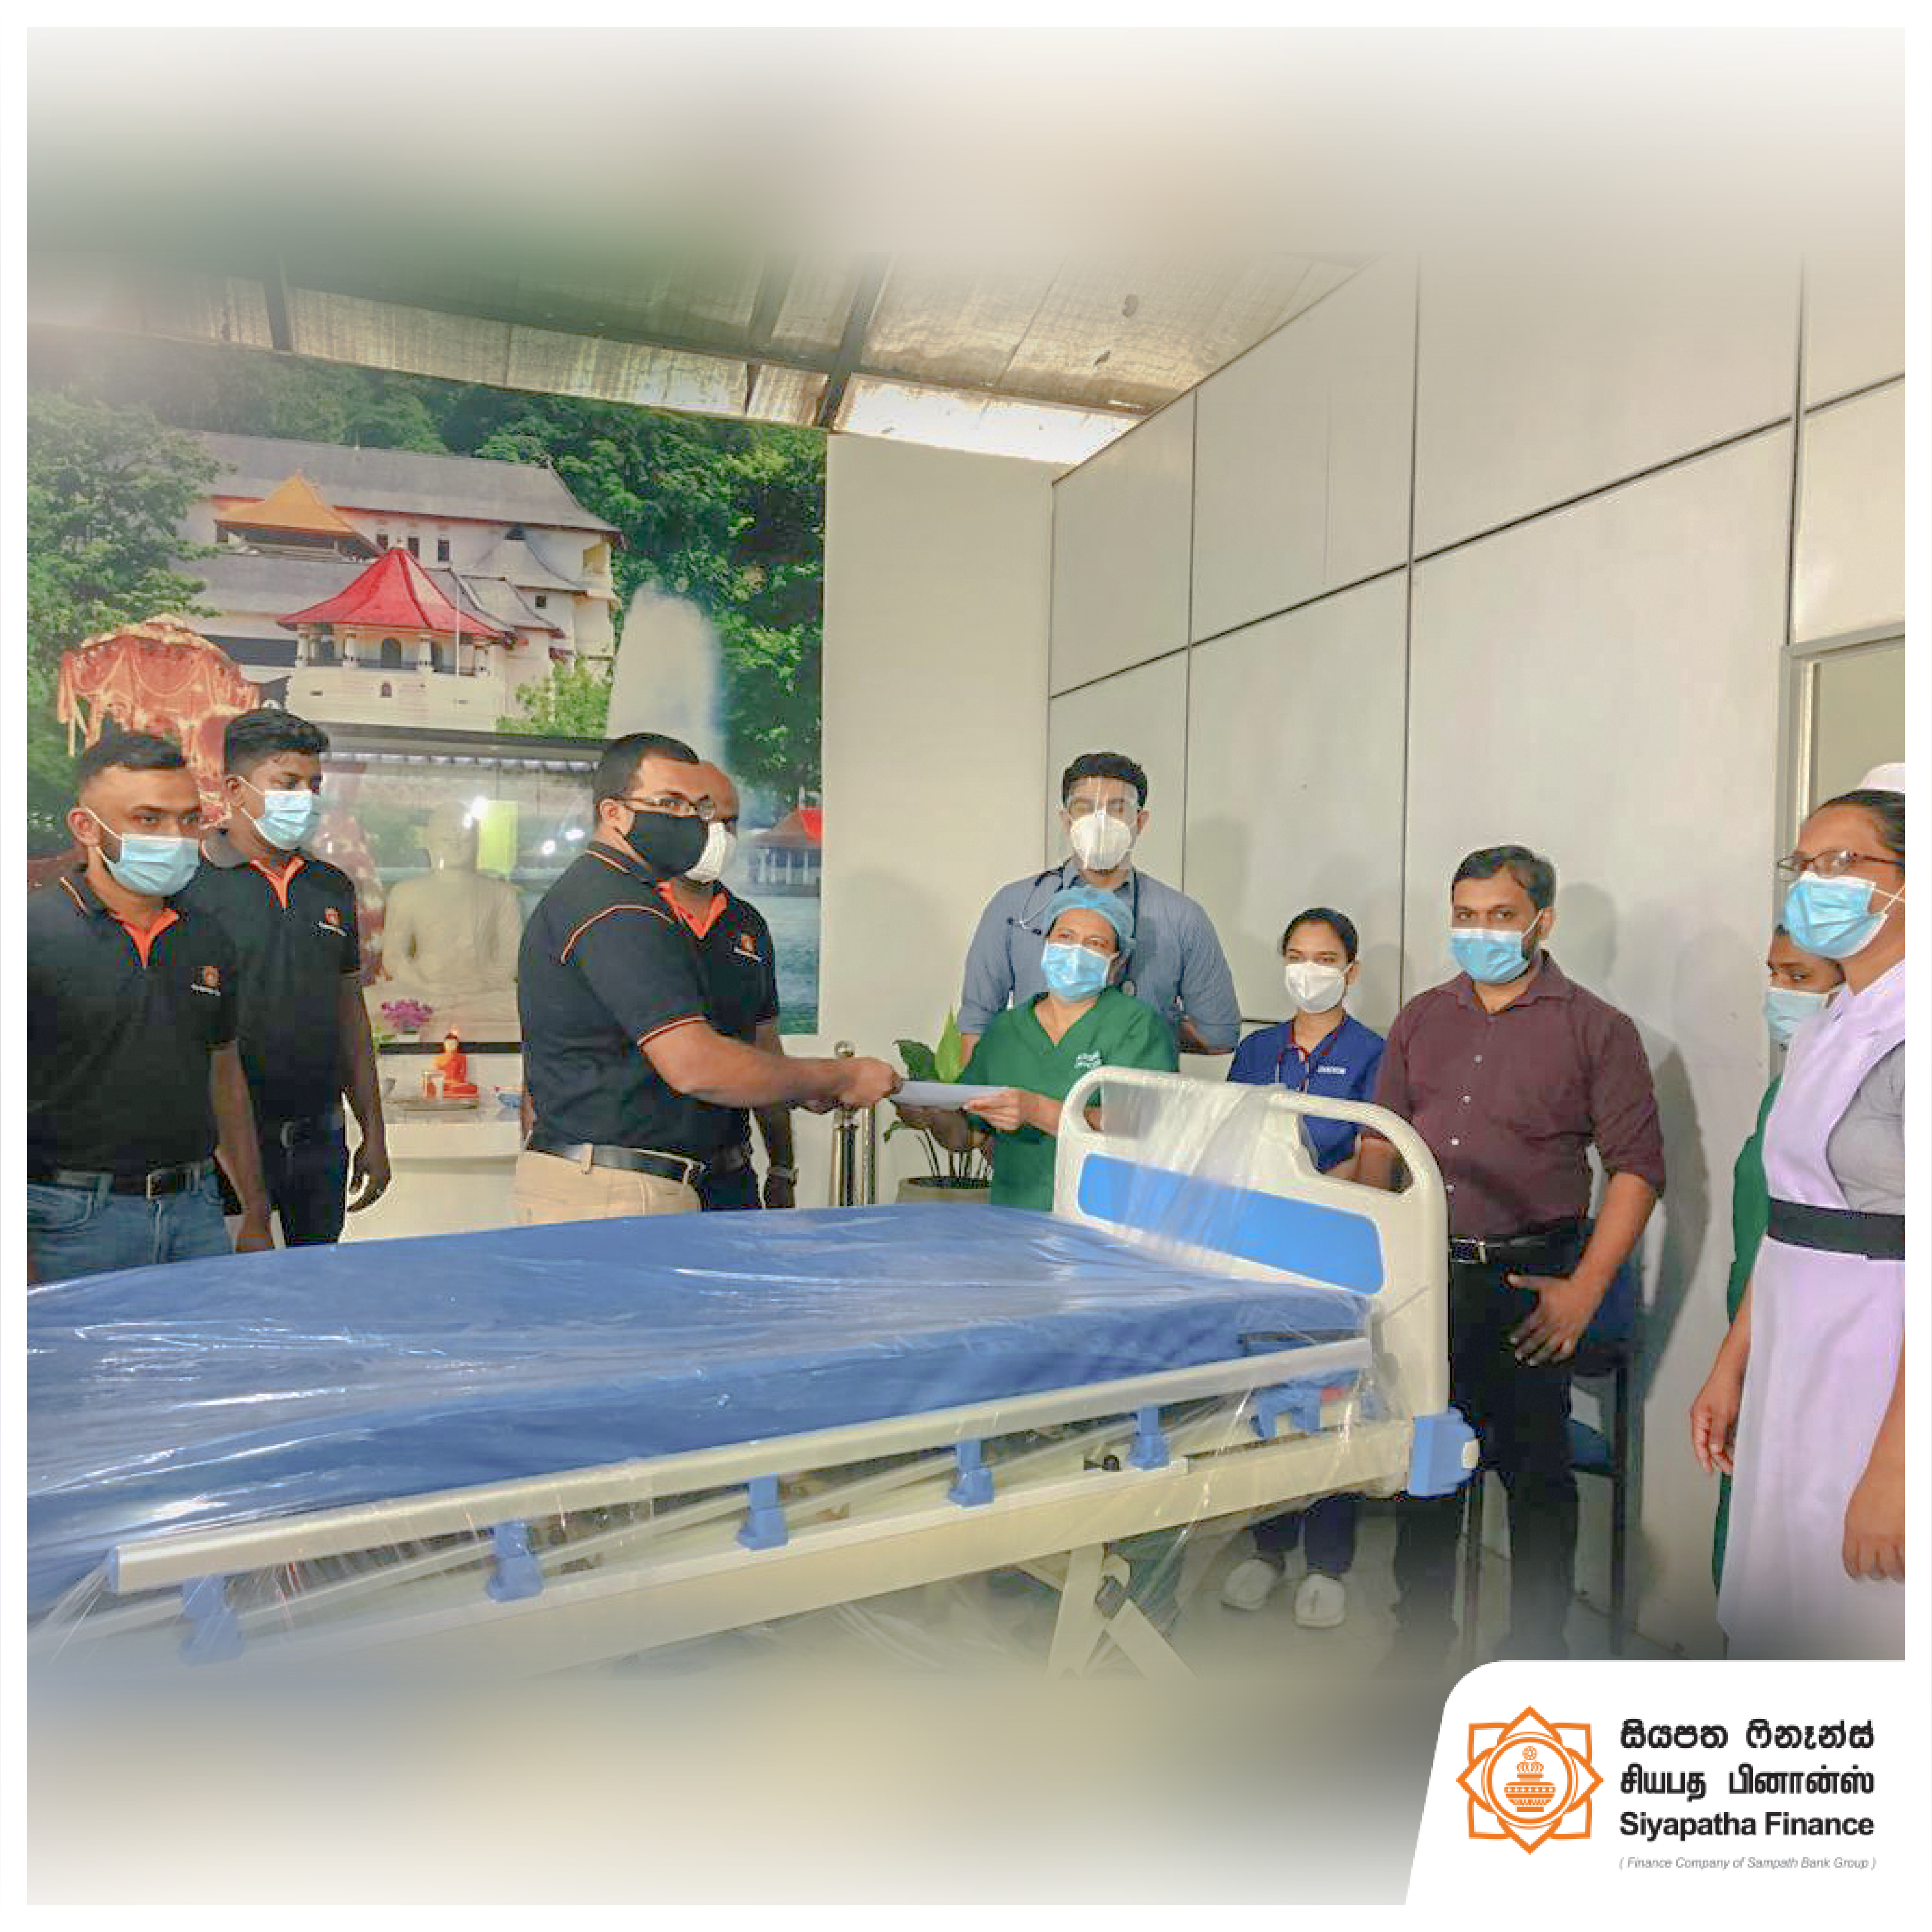 Siyapatha Finance donates an ICU bed to the Teaching Hospital of Anuradhapura